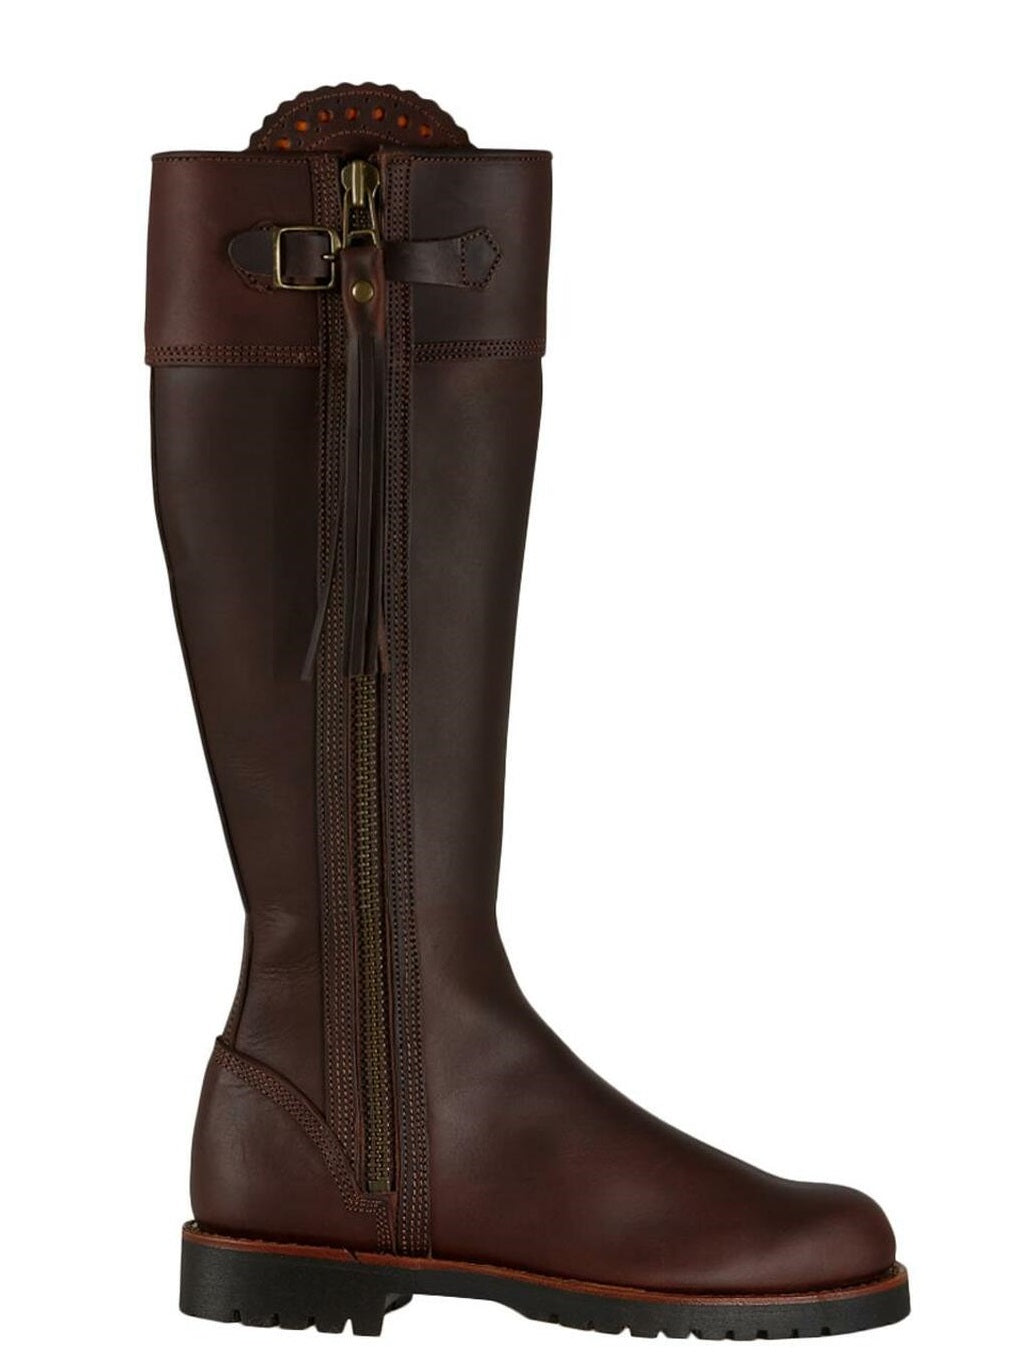 PENELOPE CHILVERS Standard Tassel Boots - Leather - Conker